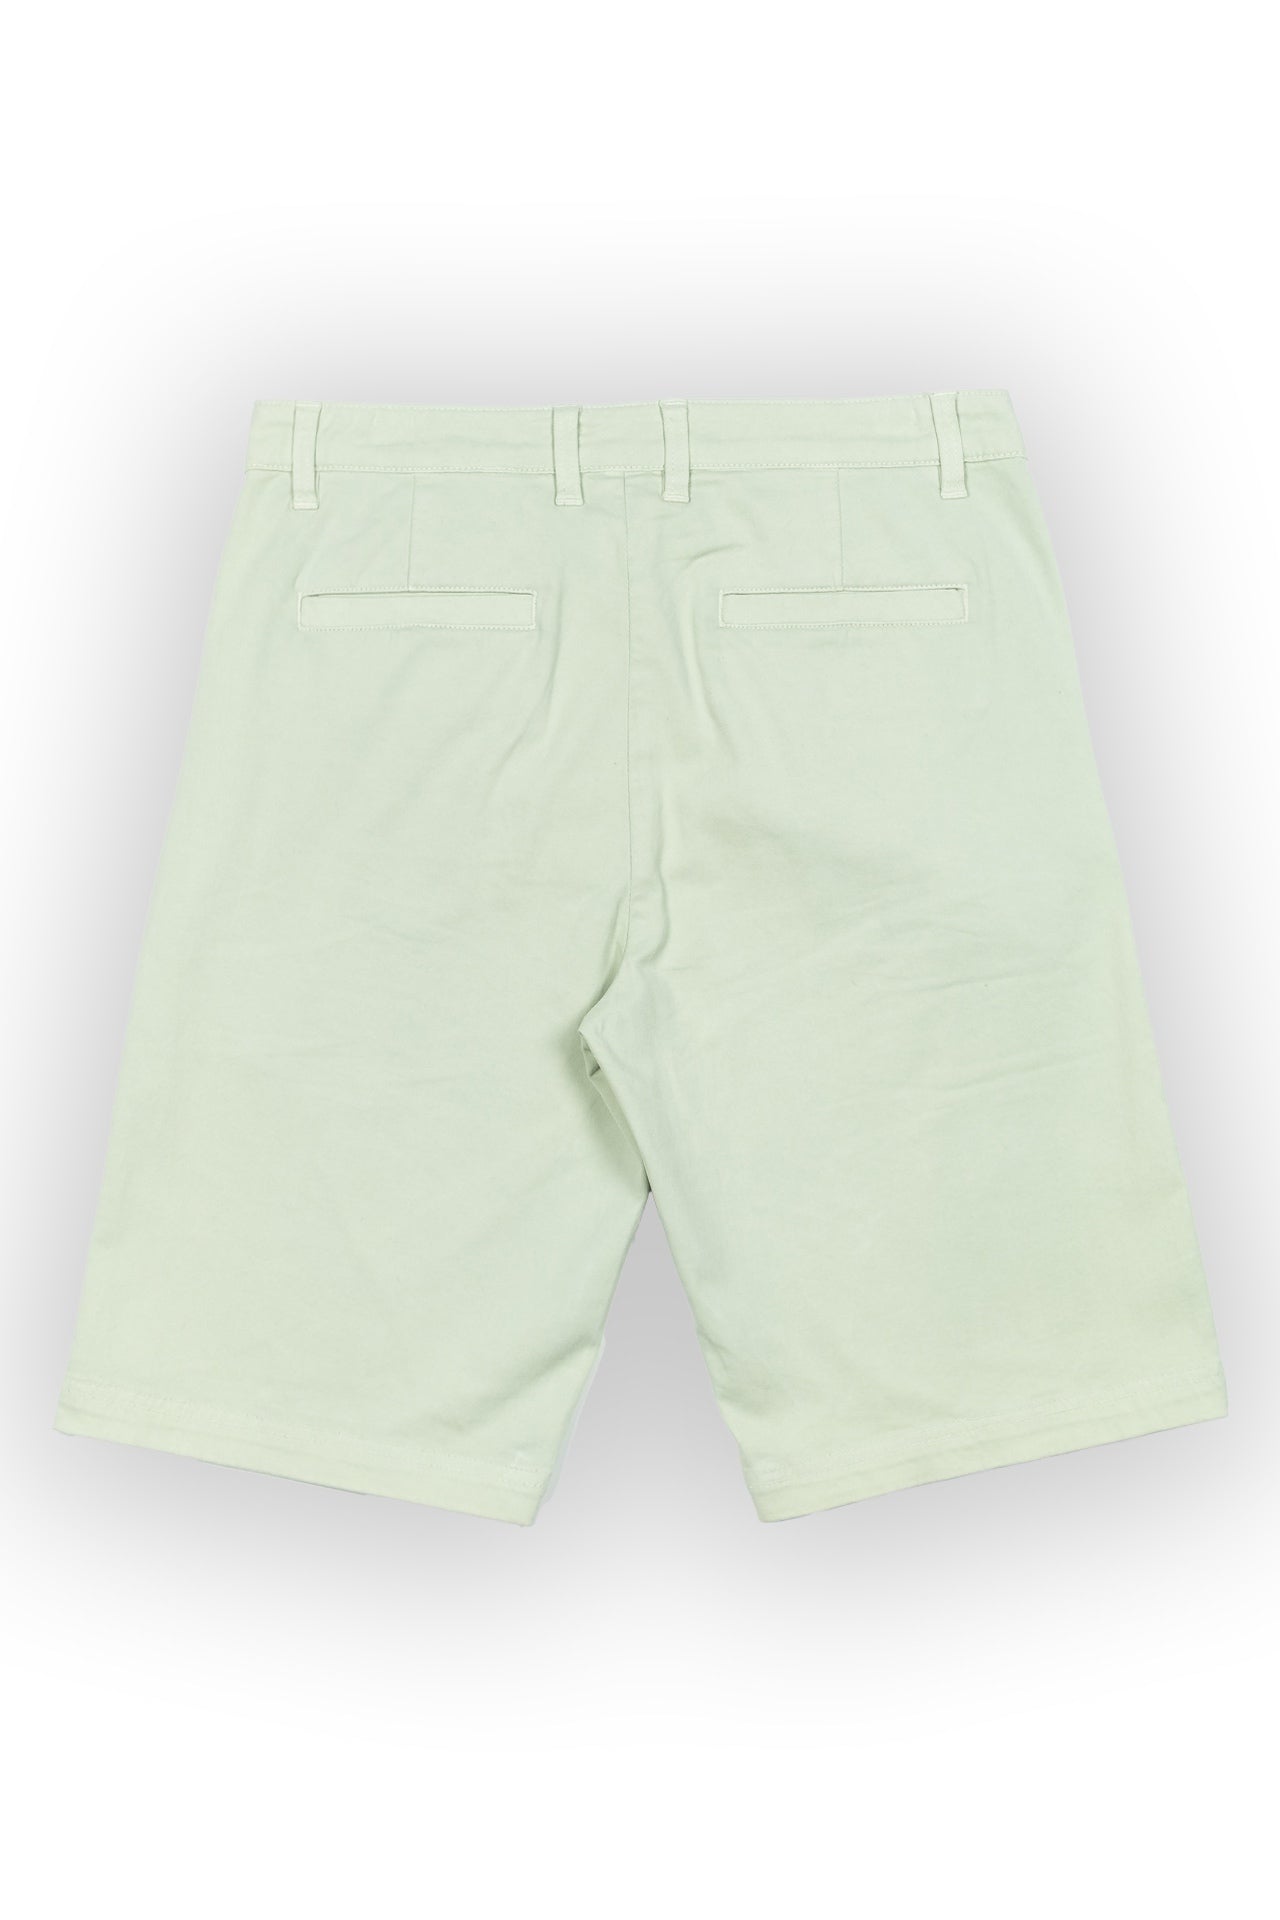 Spencer Green Chino Shorts - Rupert and Buckley - Shorts